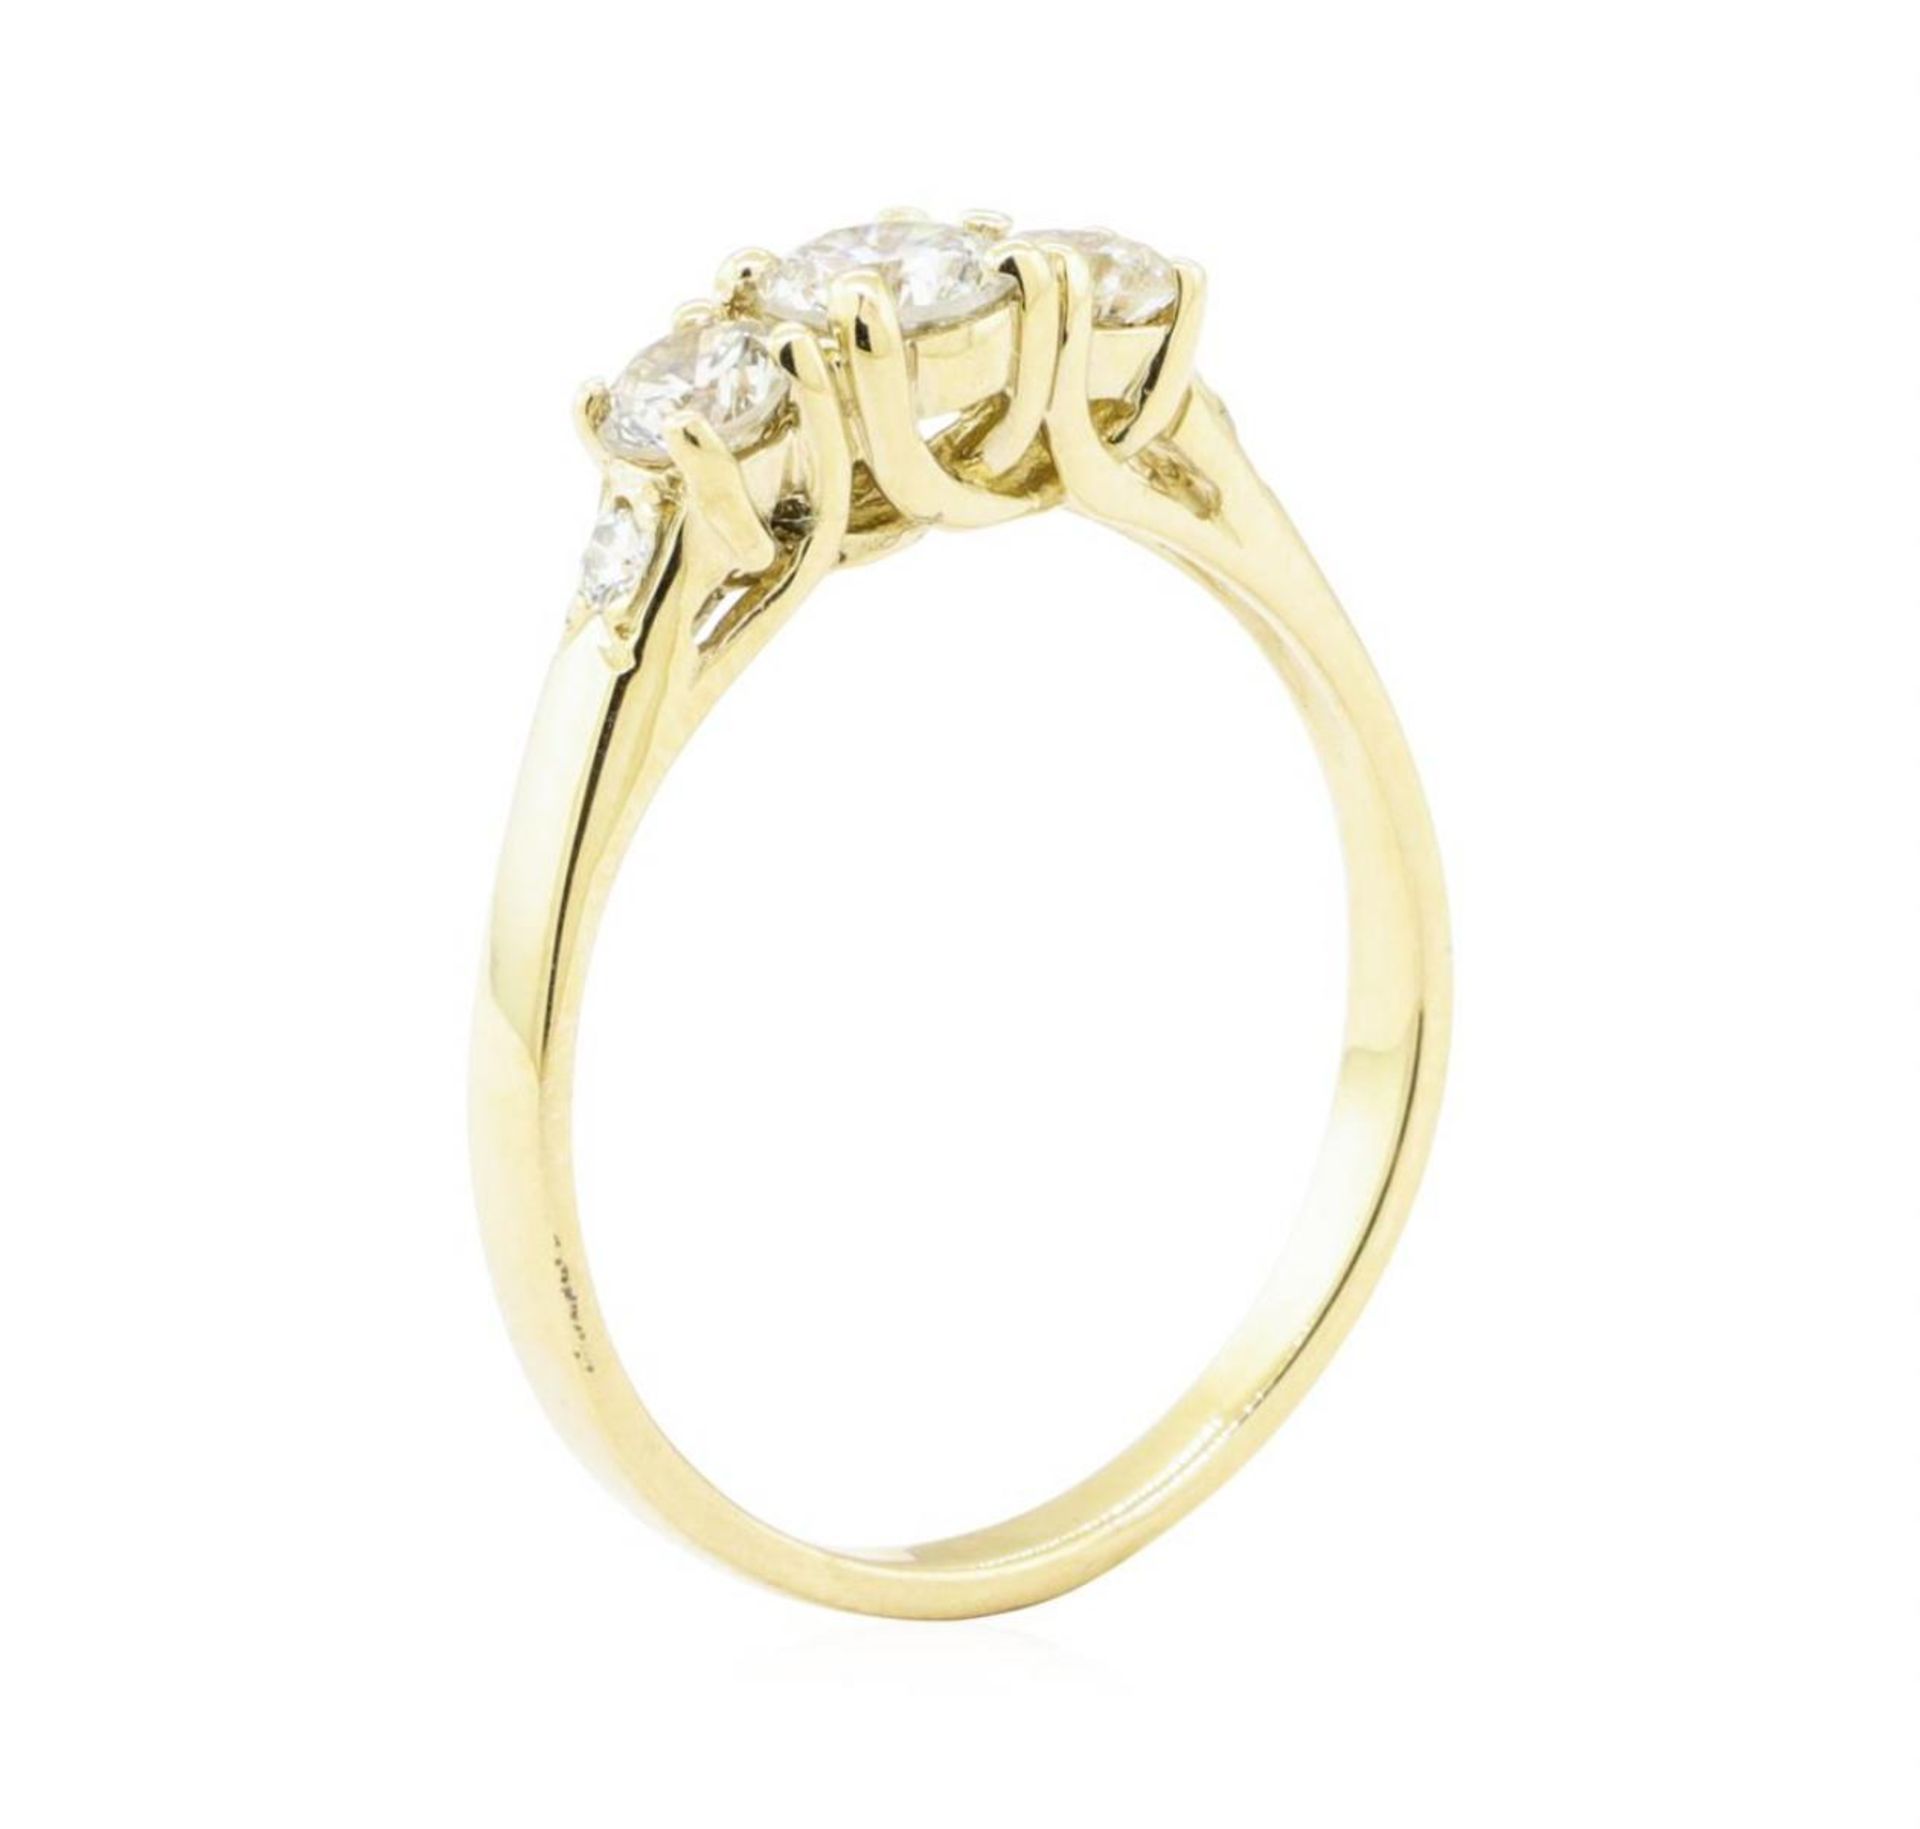 0.75 ctw Diamond Ring - 14KT Yellow Gold - Image 4 of 5